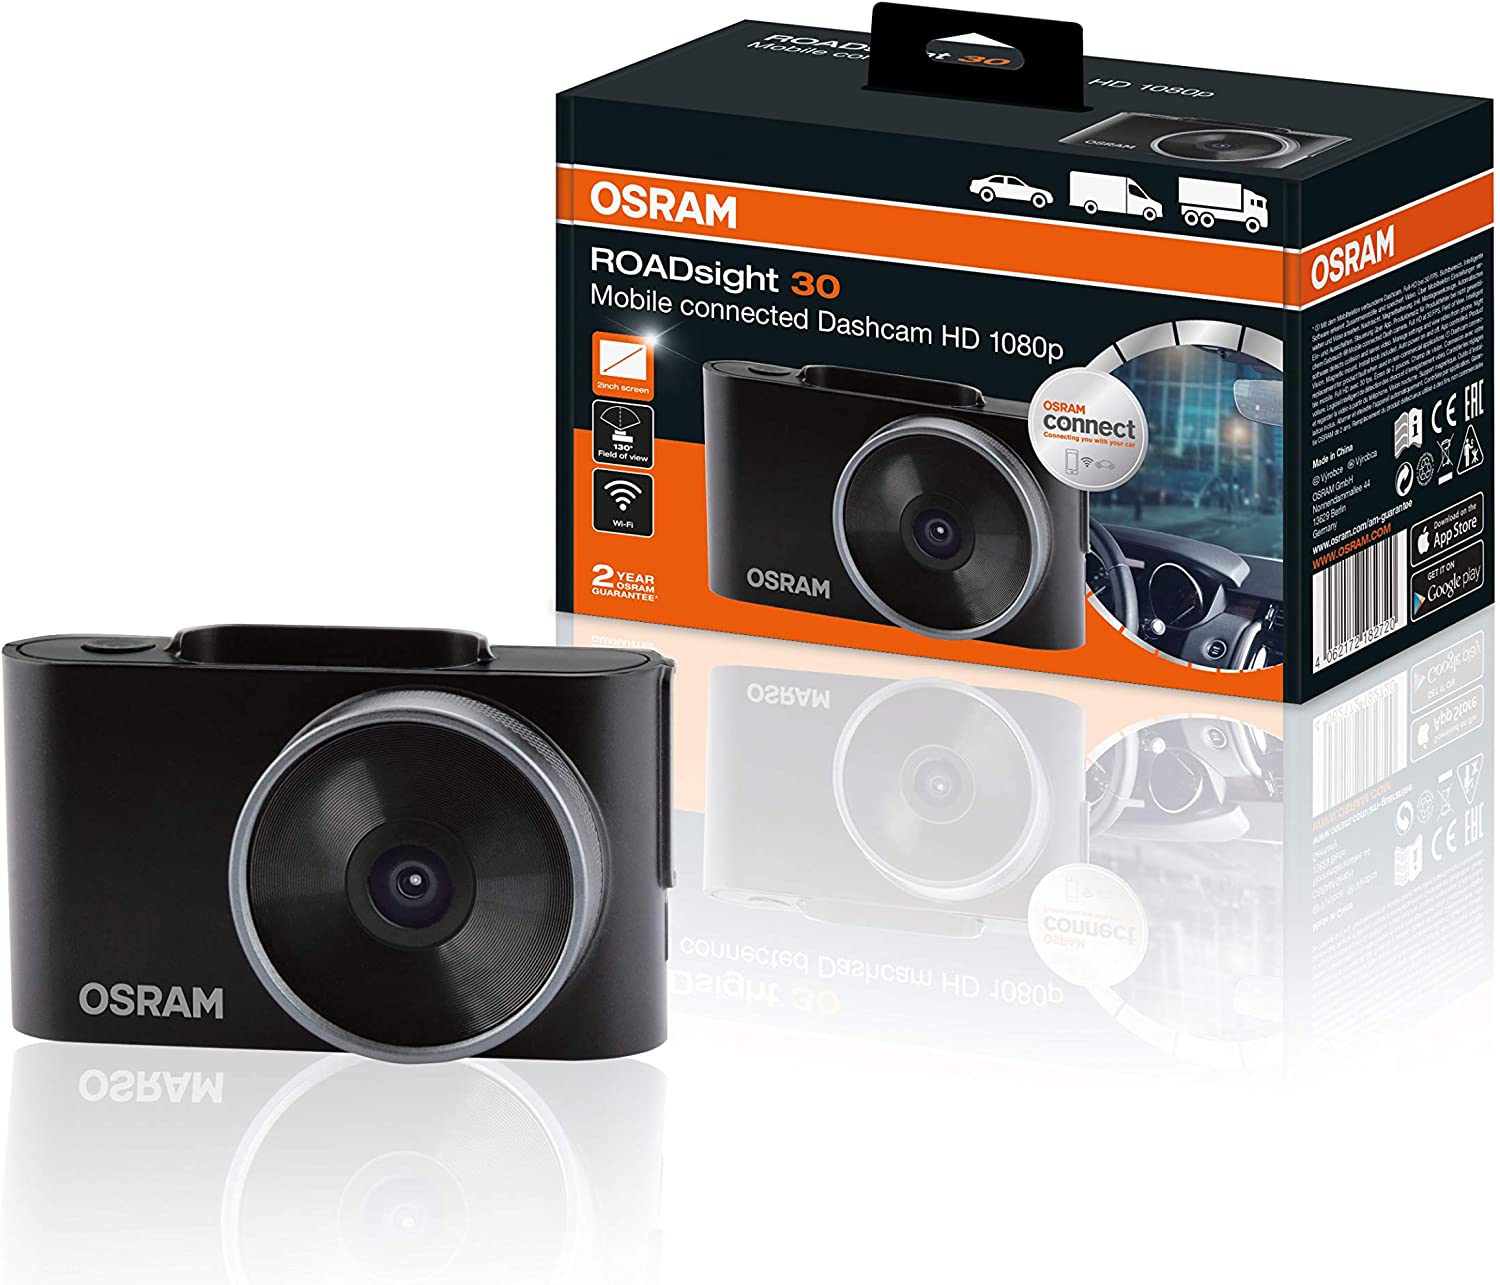 Osram ROADsight 30 Mobile connected Dashcam HD 1080p